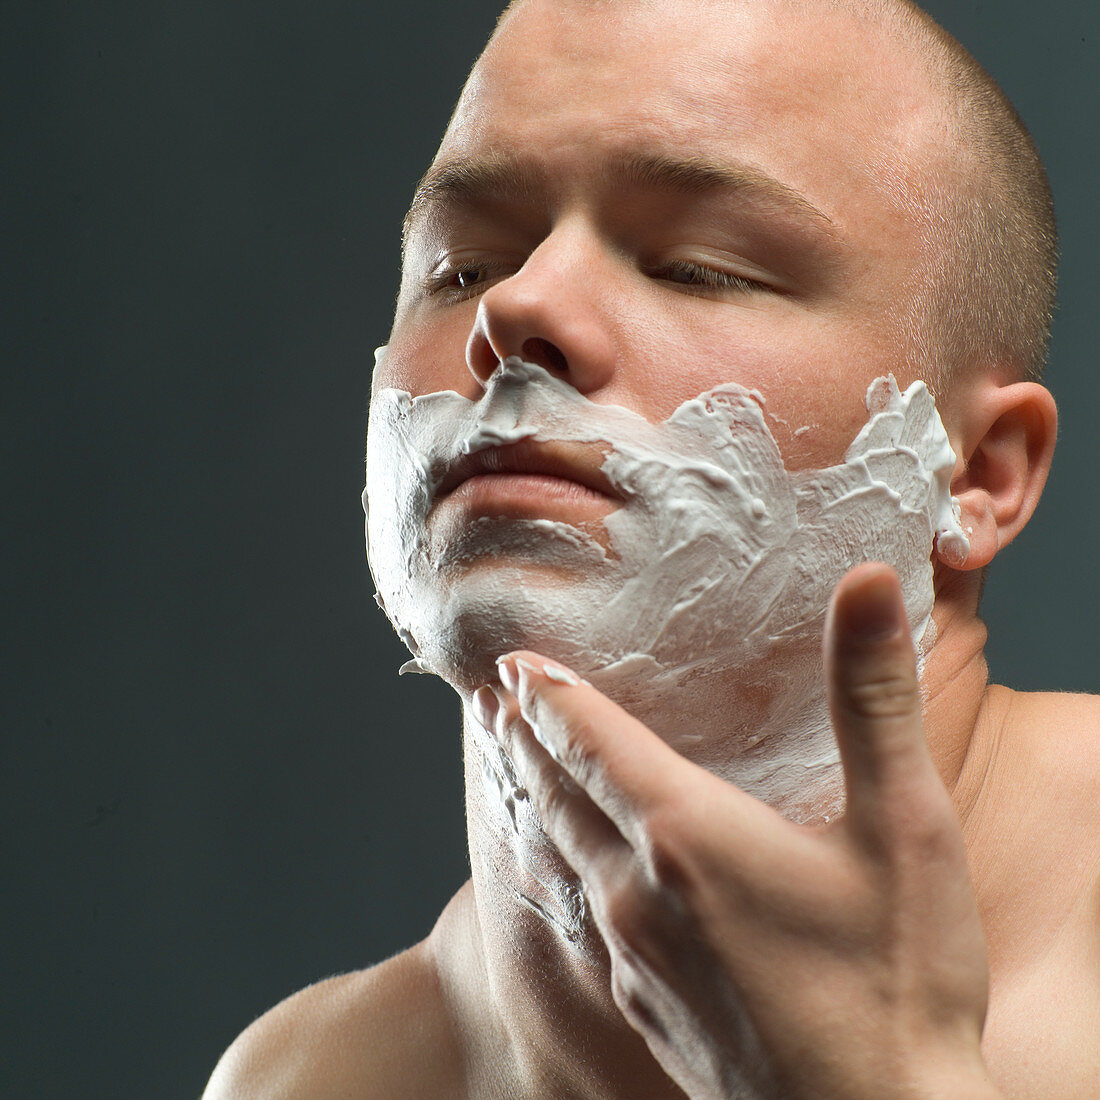 Shaving foam